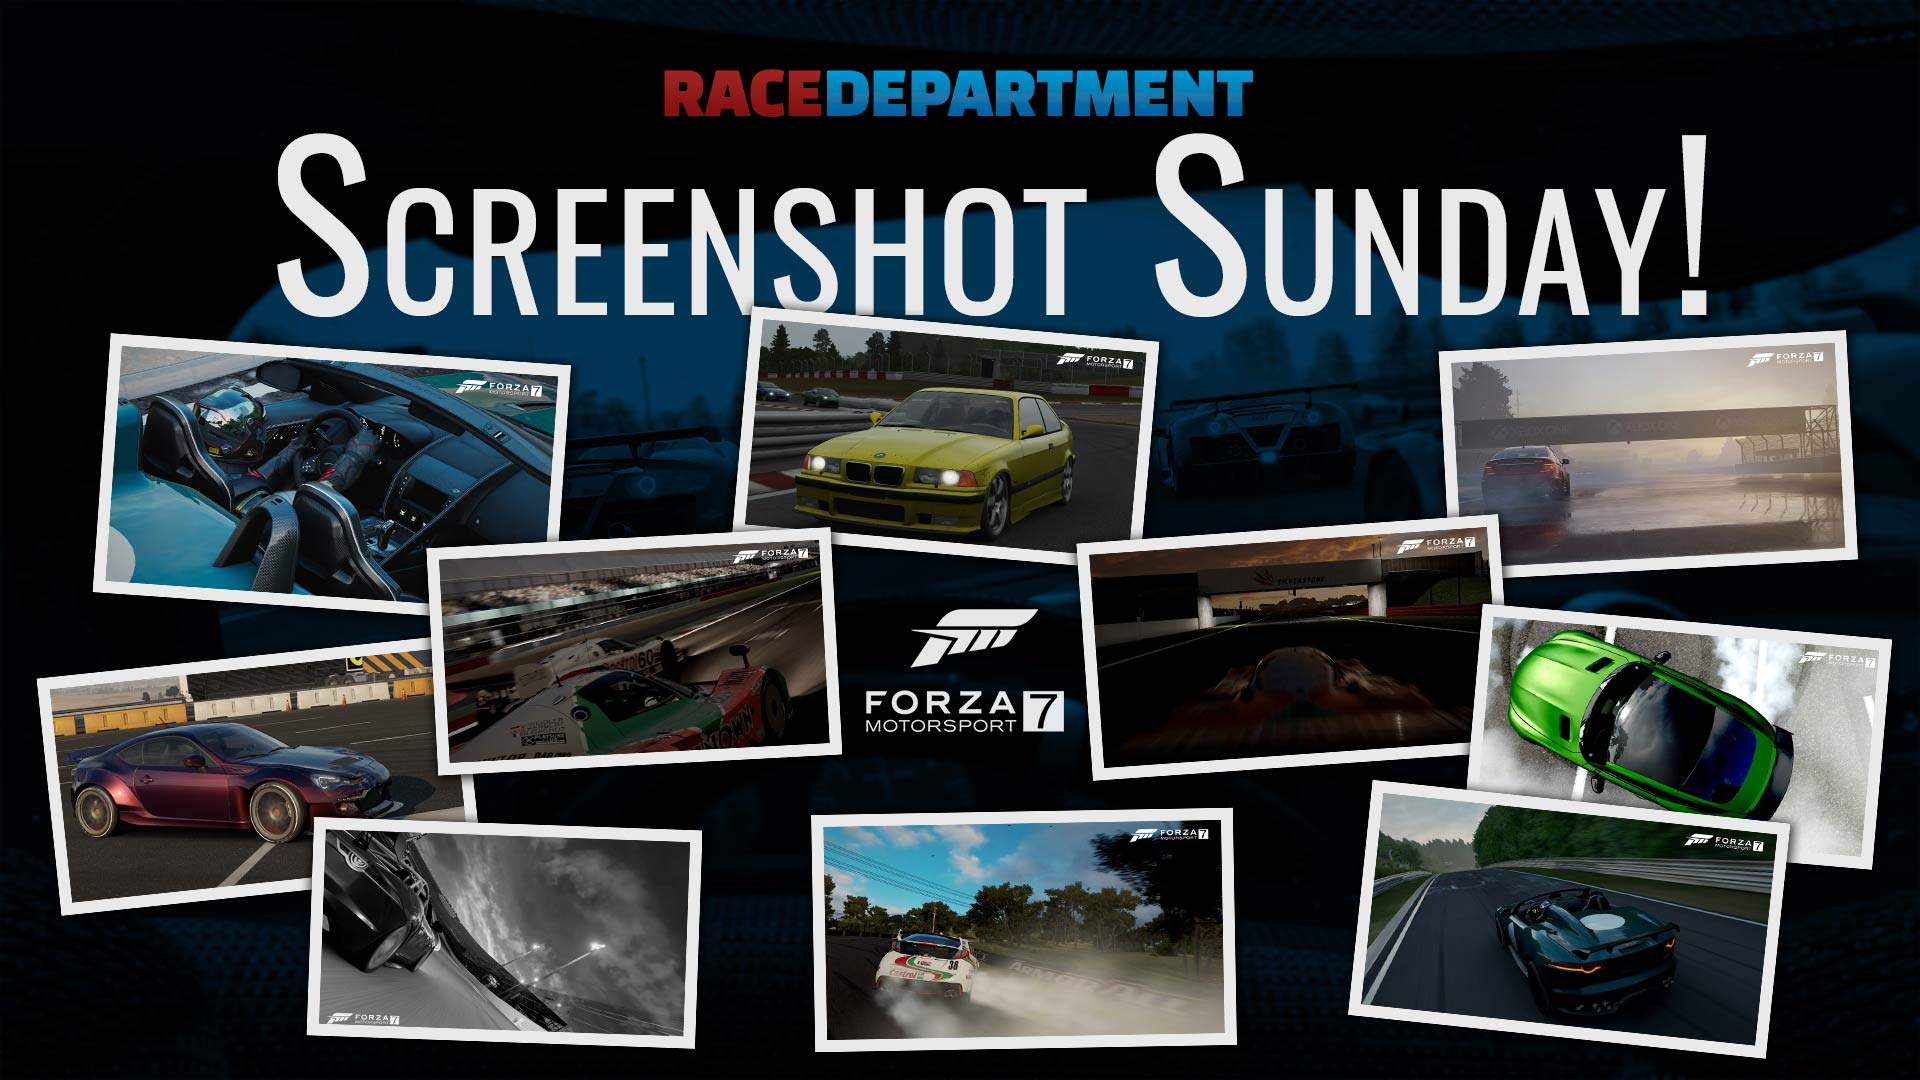 Screenshot Sunday - Forza Motorsport 7 Edition.jpg